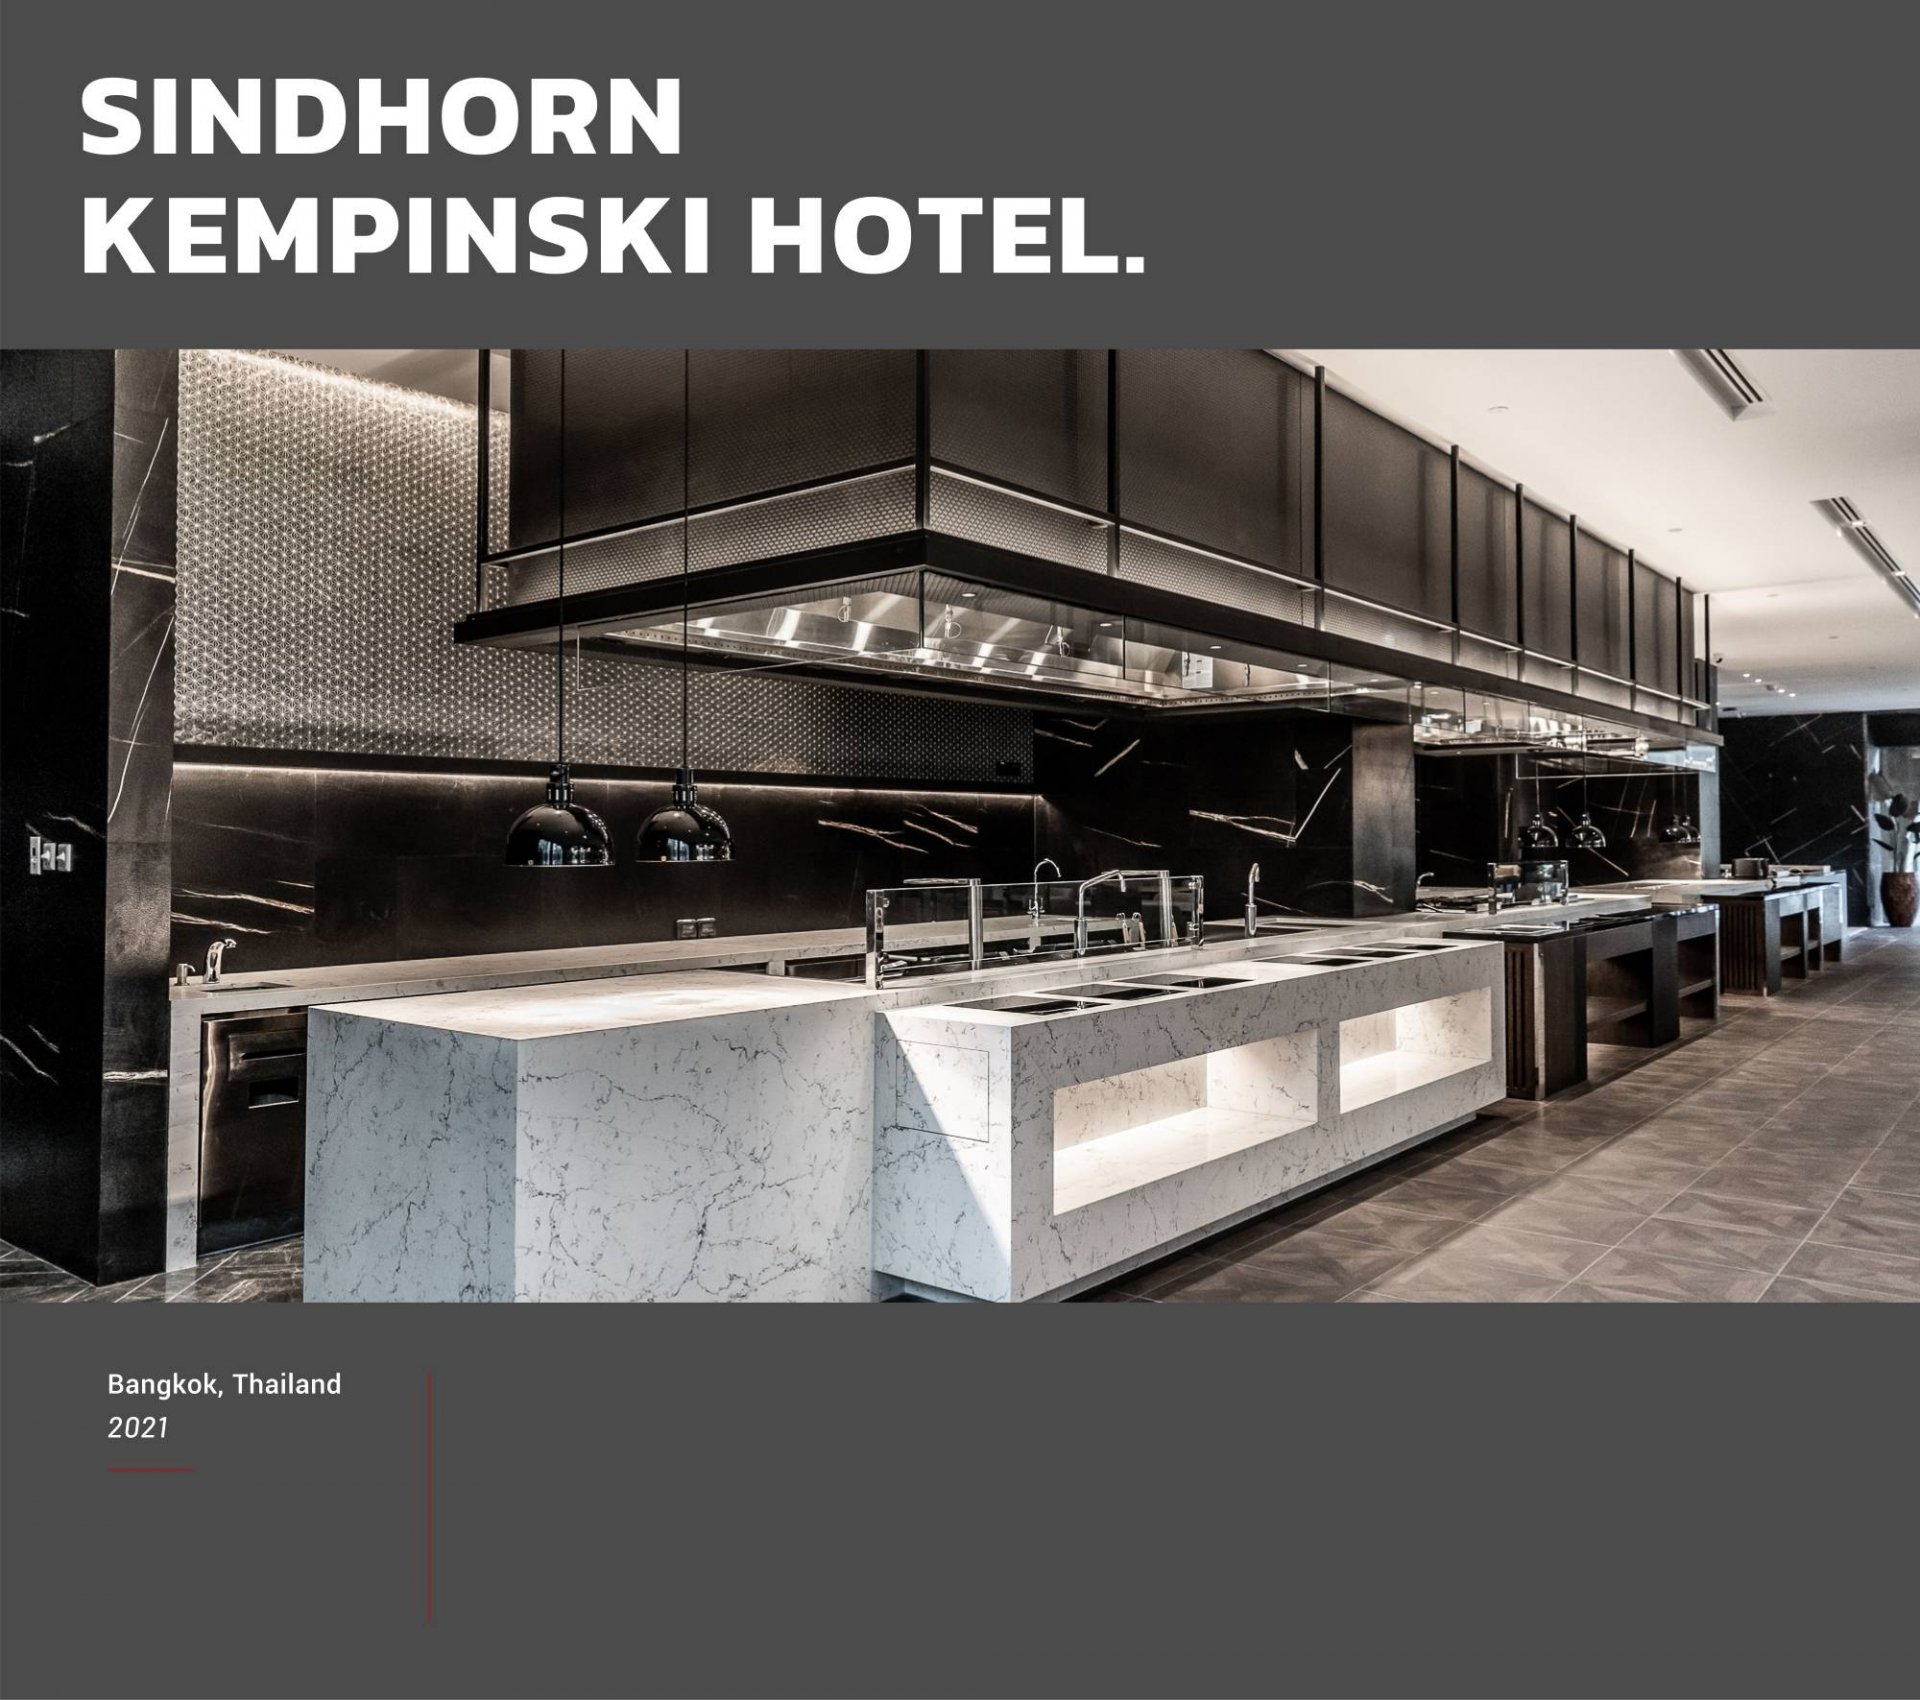 Sindhorn Kempinski Hotel